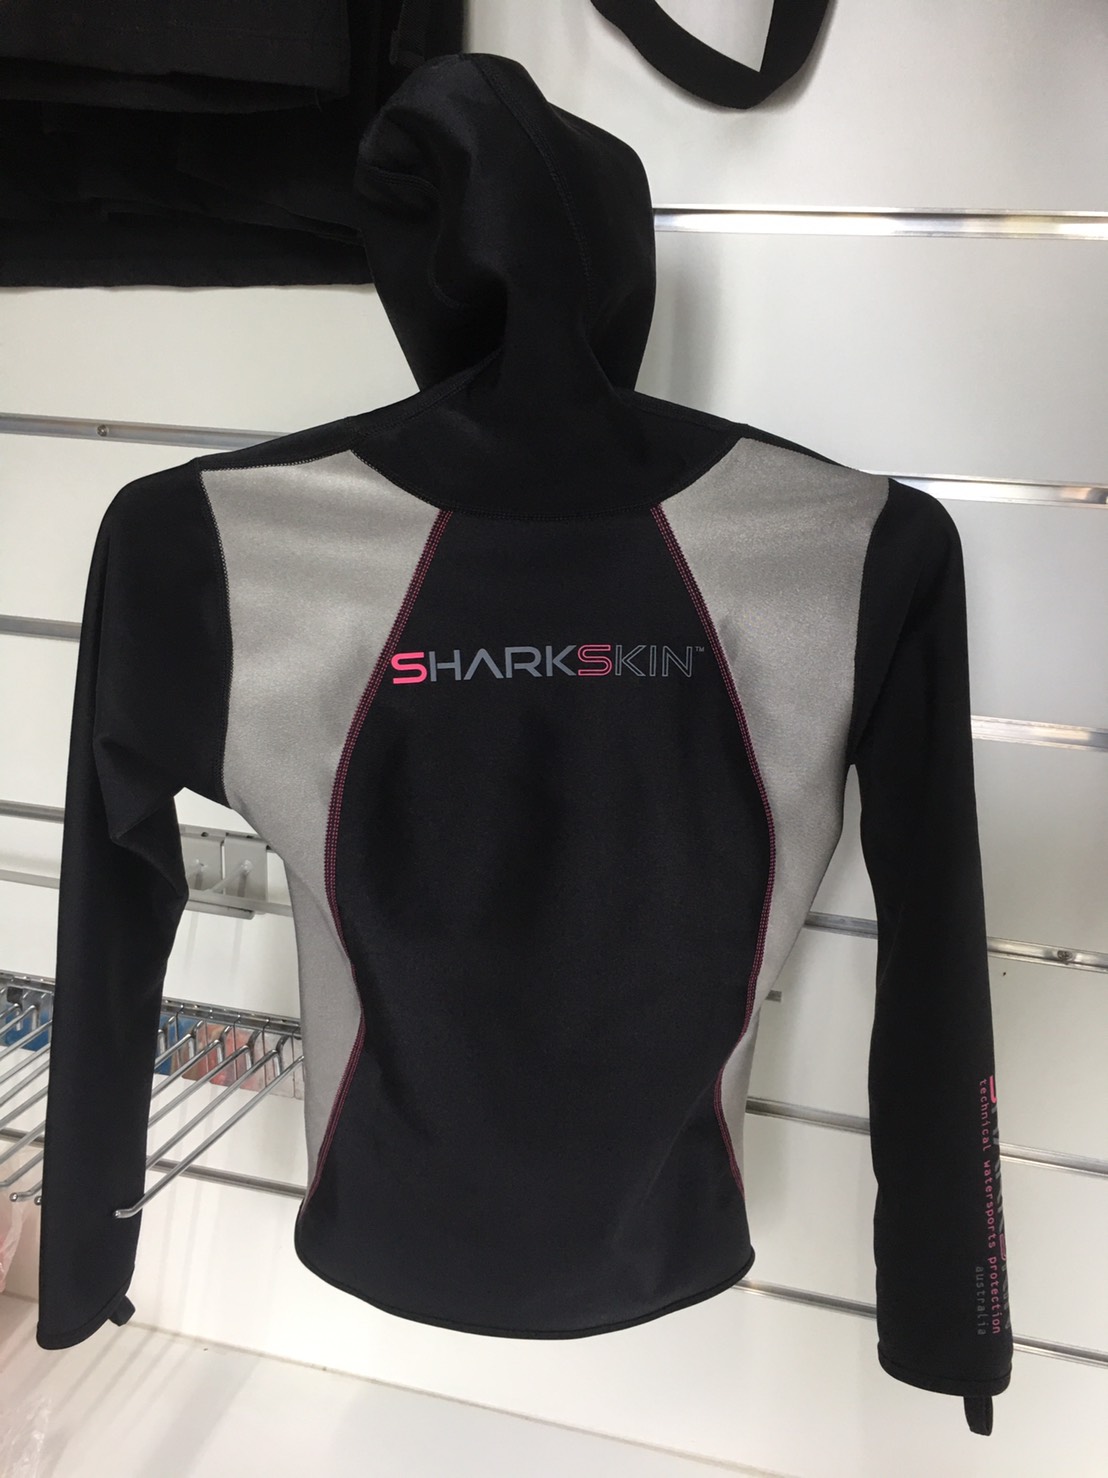 Sharkskin Chill-Proof Hooded Shirt Features